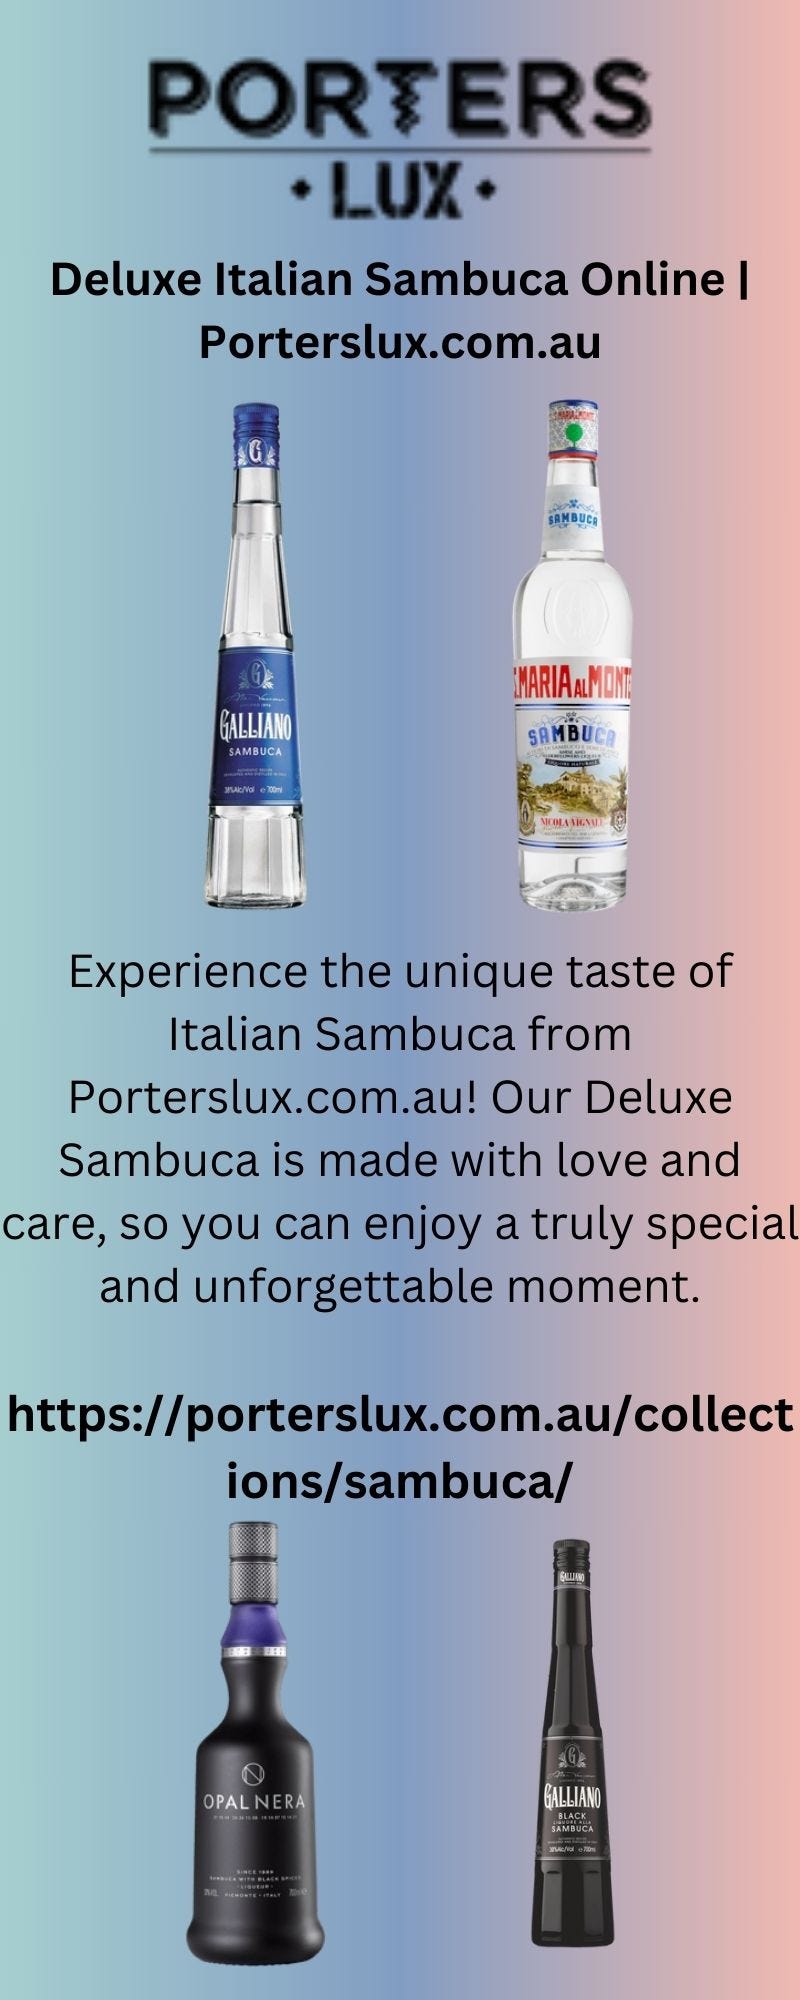 Deluxe Italian Sambuca Online | Porterslux.com.au - Proter Slux - Medium